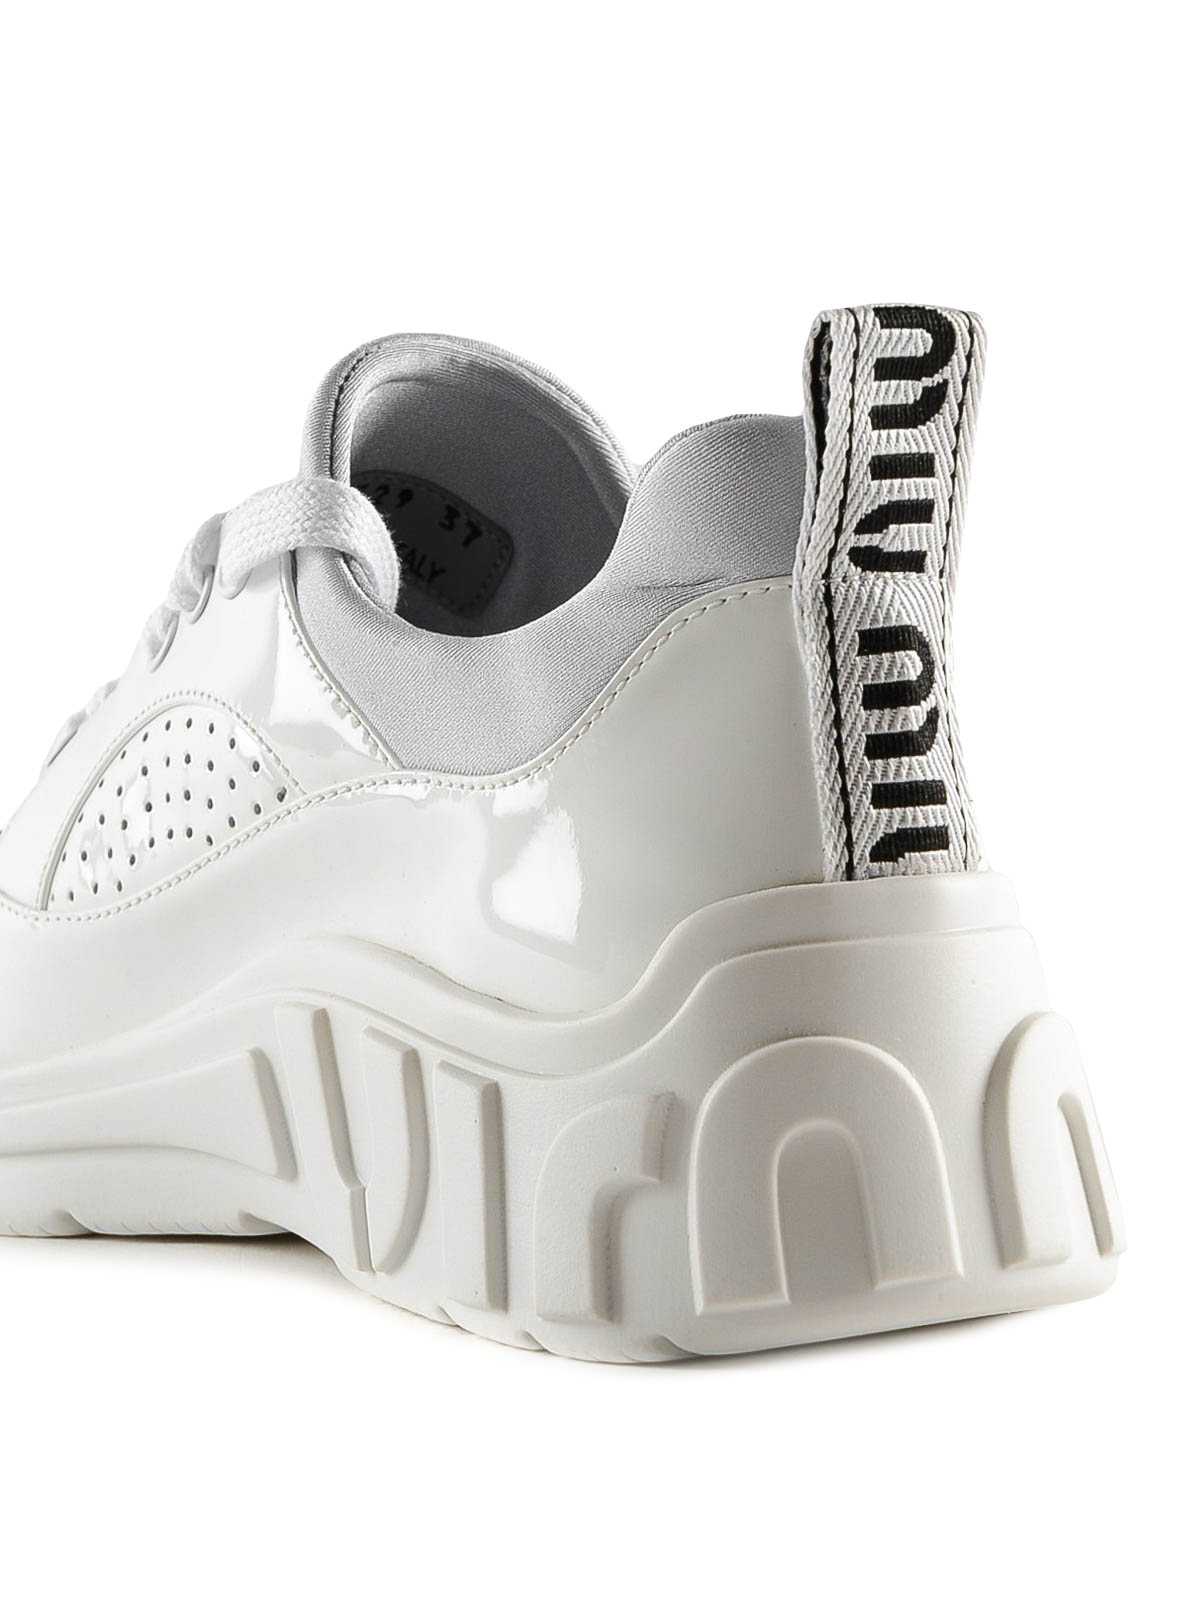 Miu Miu - White patent leather sneakers - trainers - 5E329CJHR009